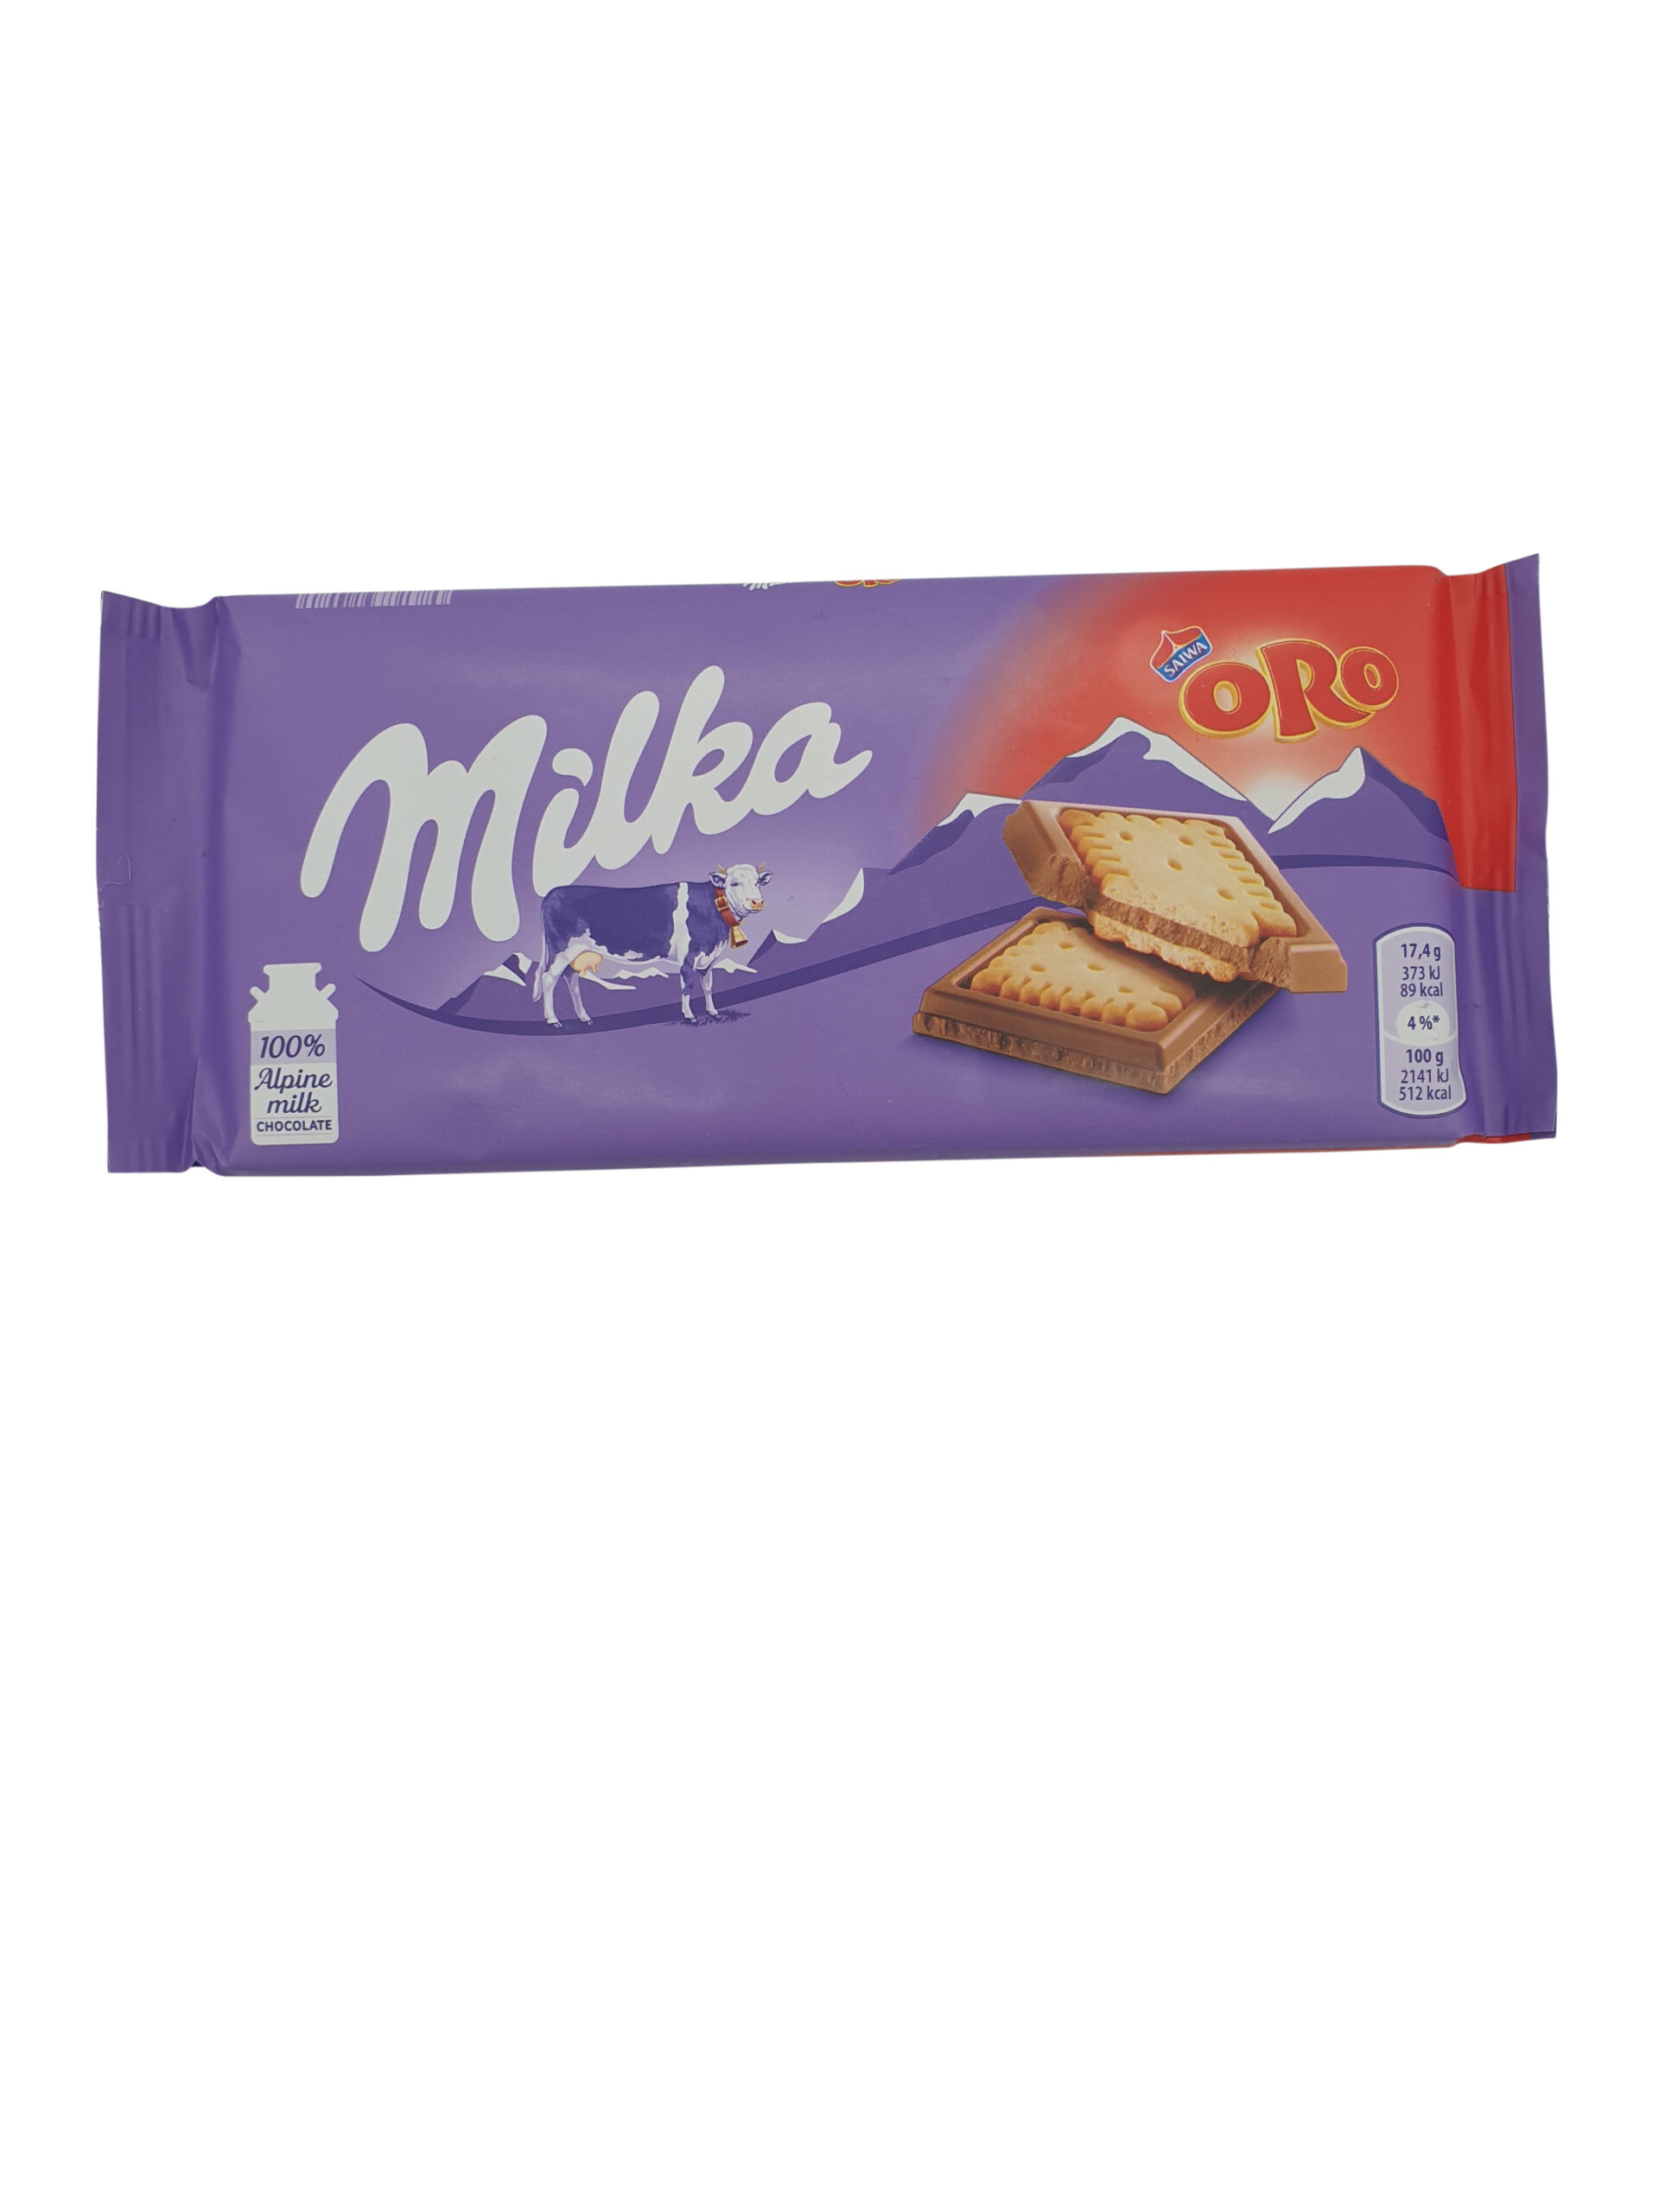 Milka & LU Biscuits Chocolate